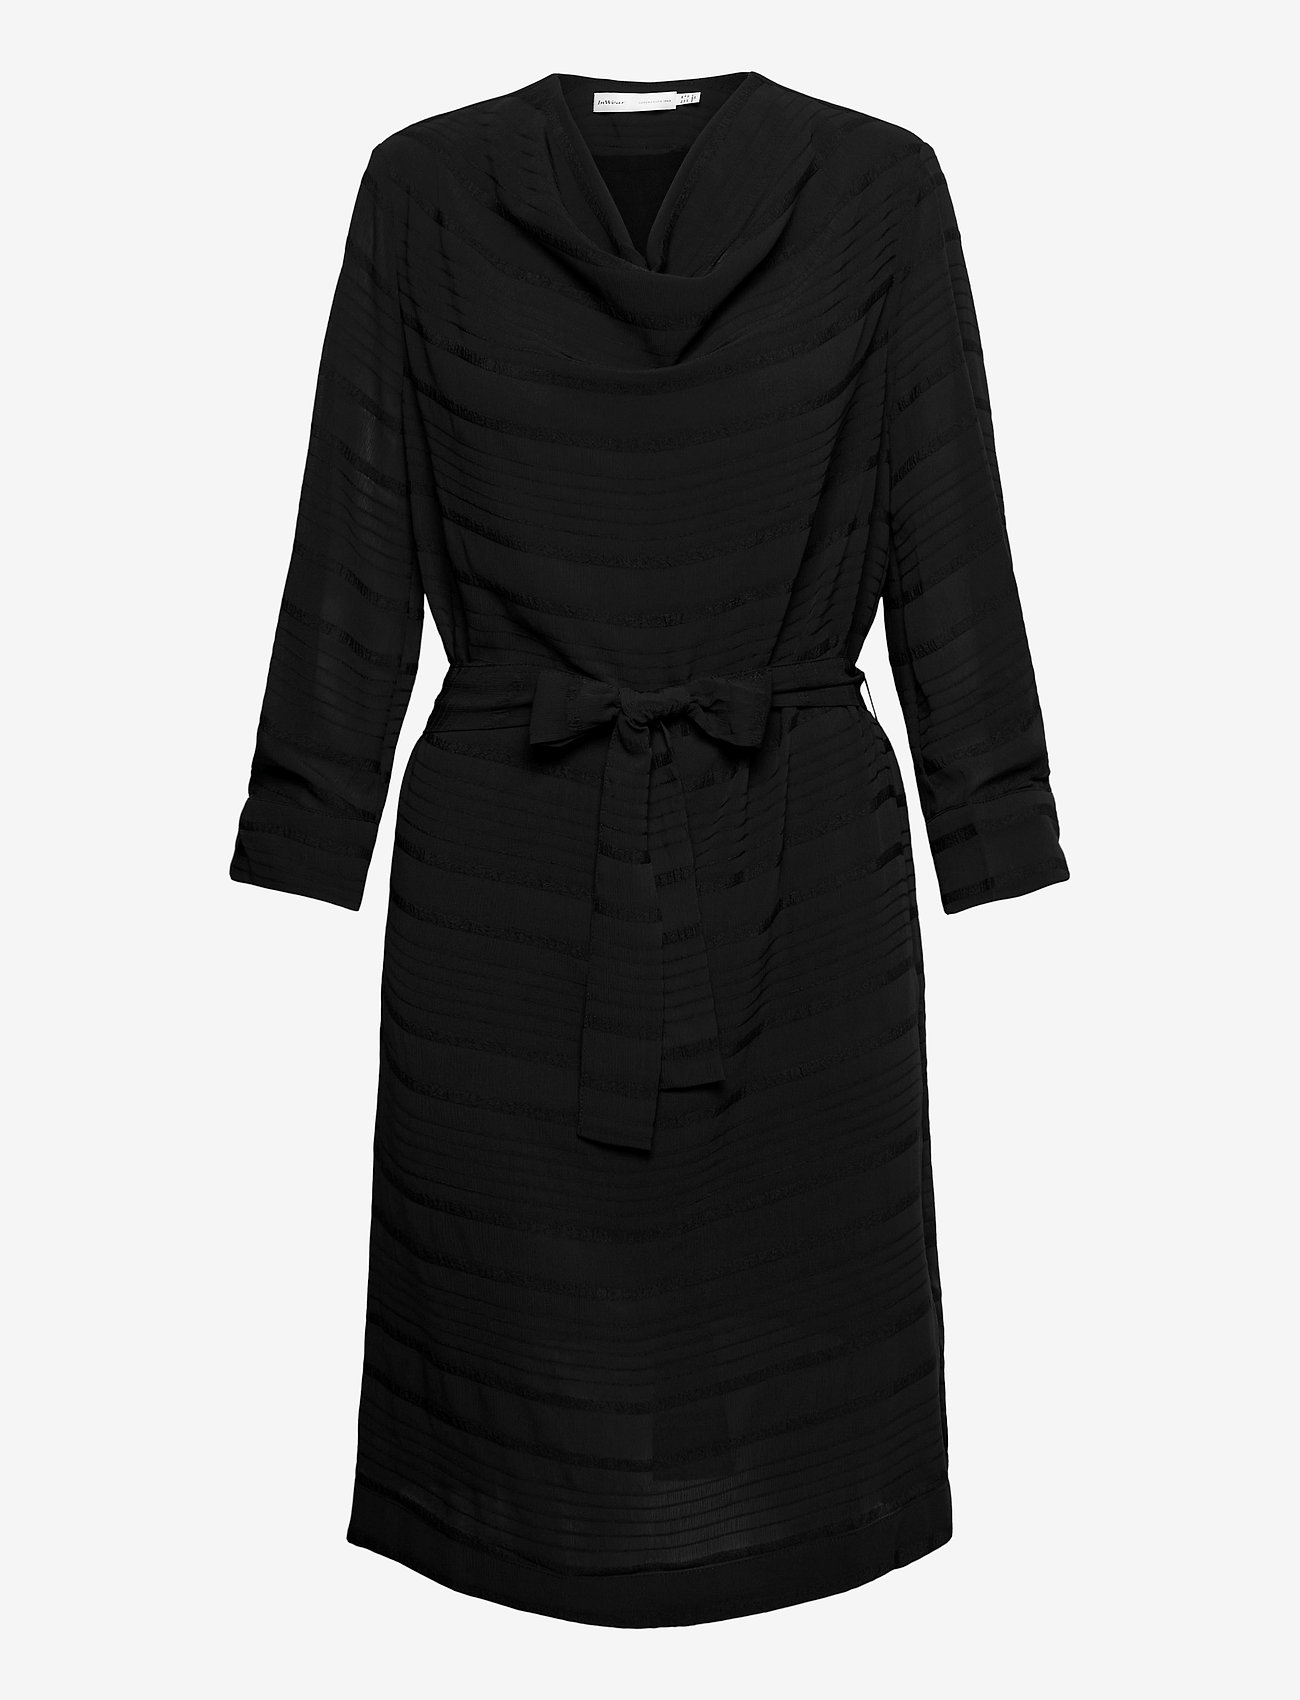 InWear - PablahIW Dress - midikjoler - black - 0